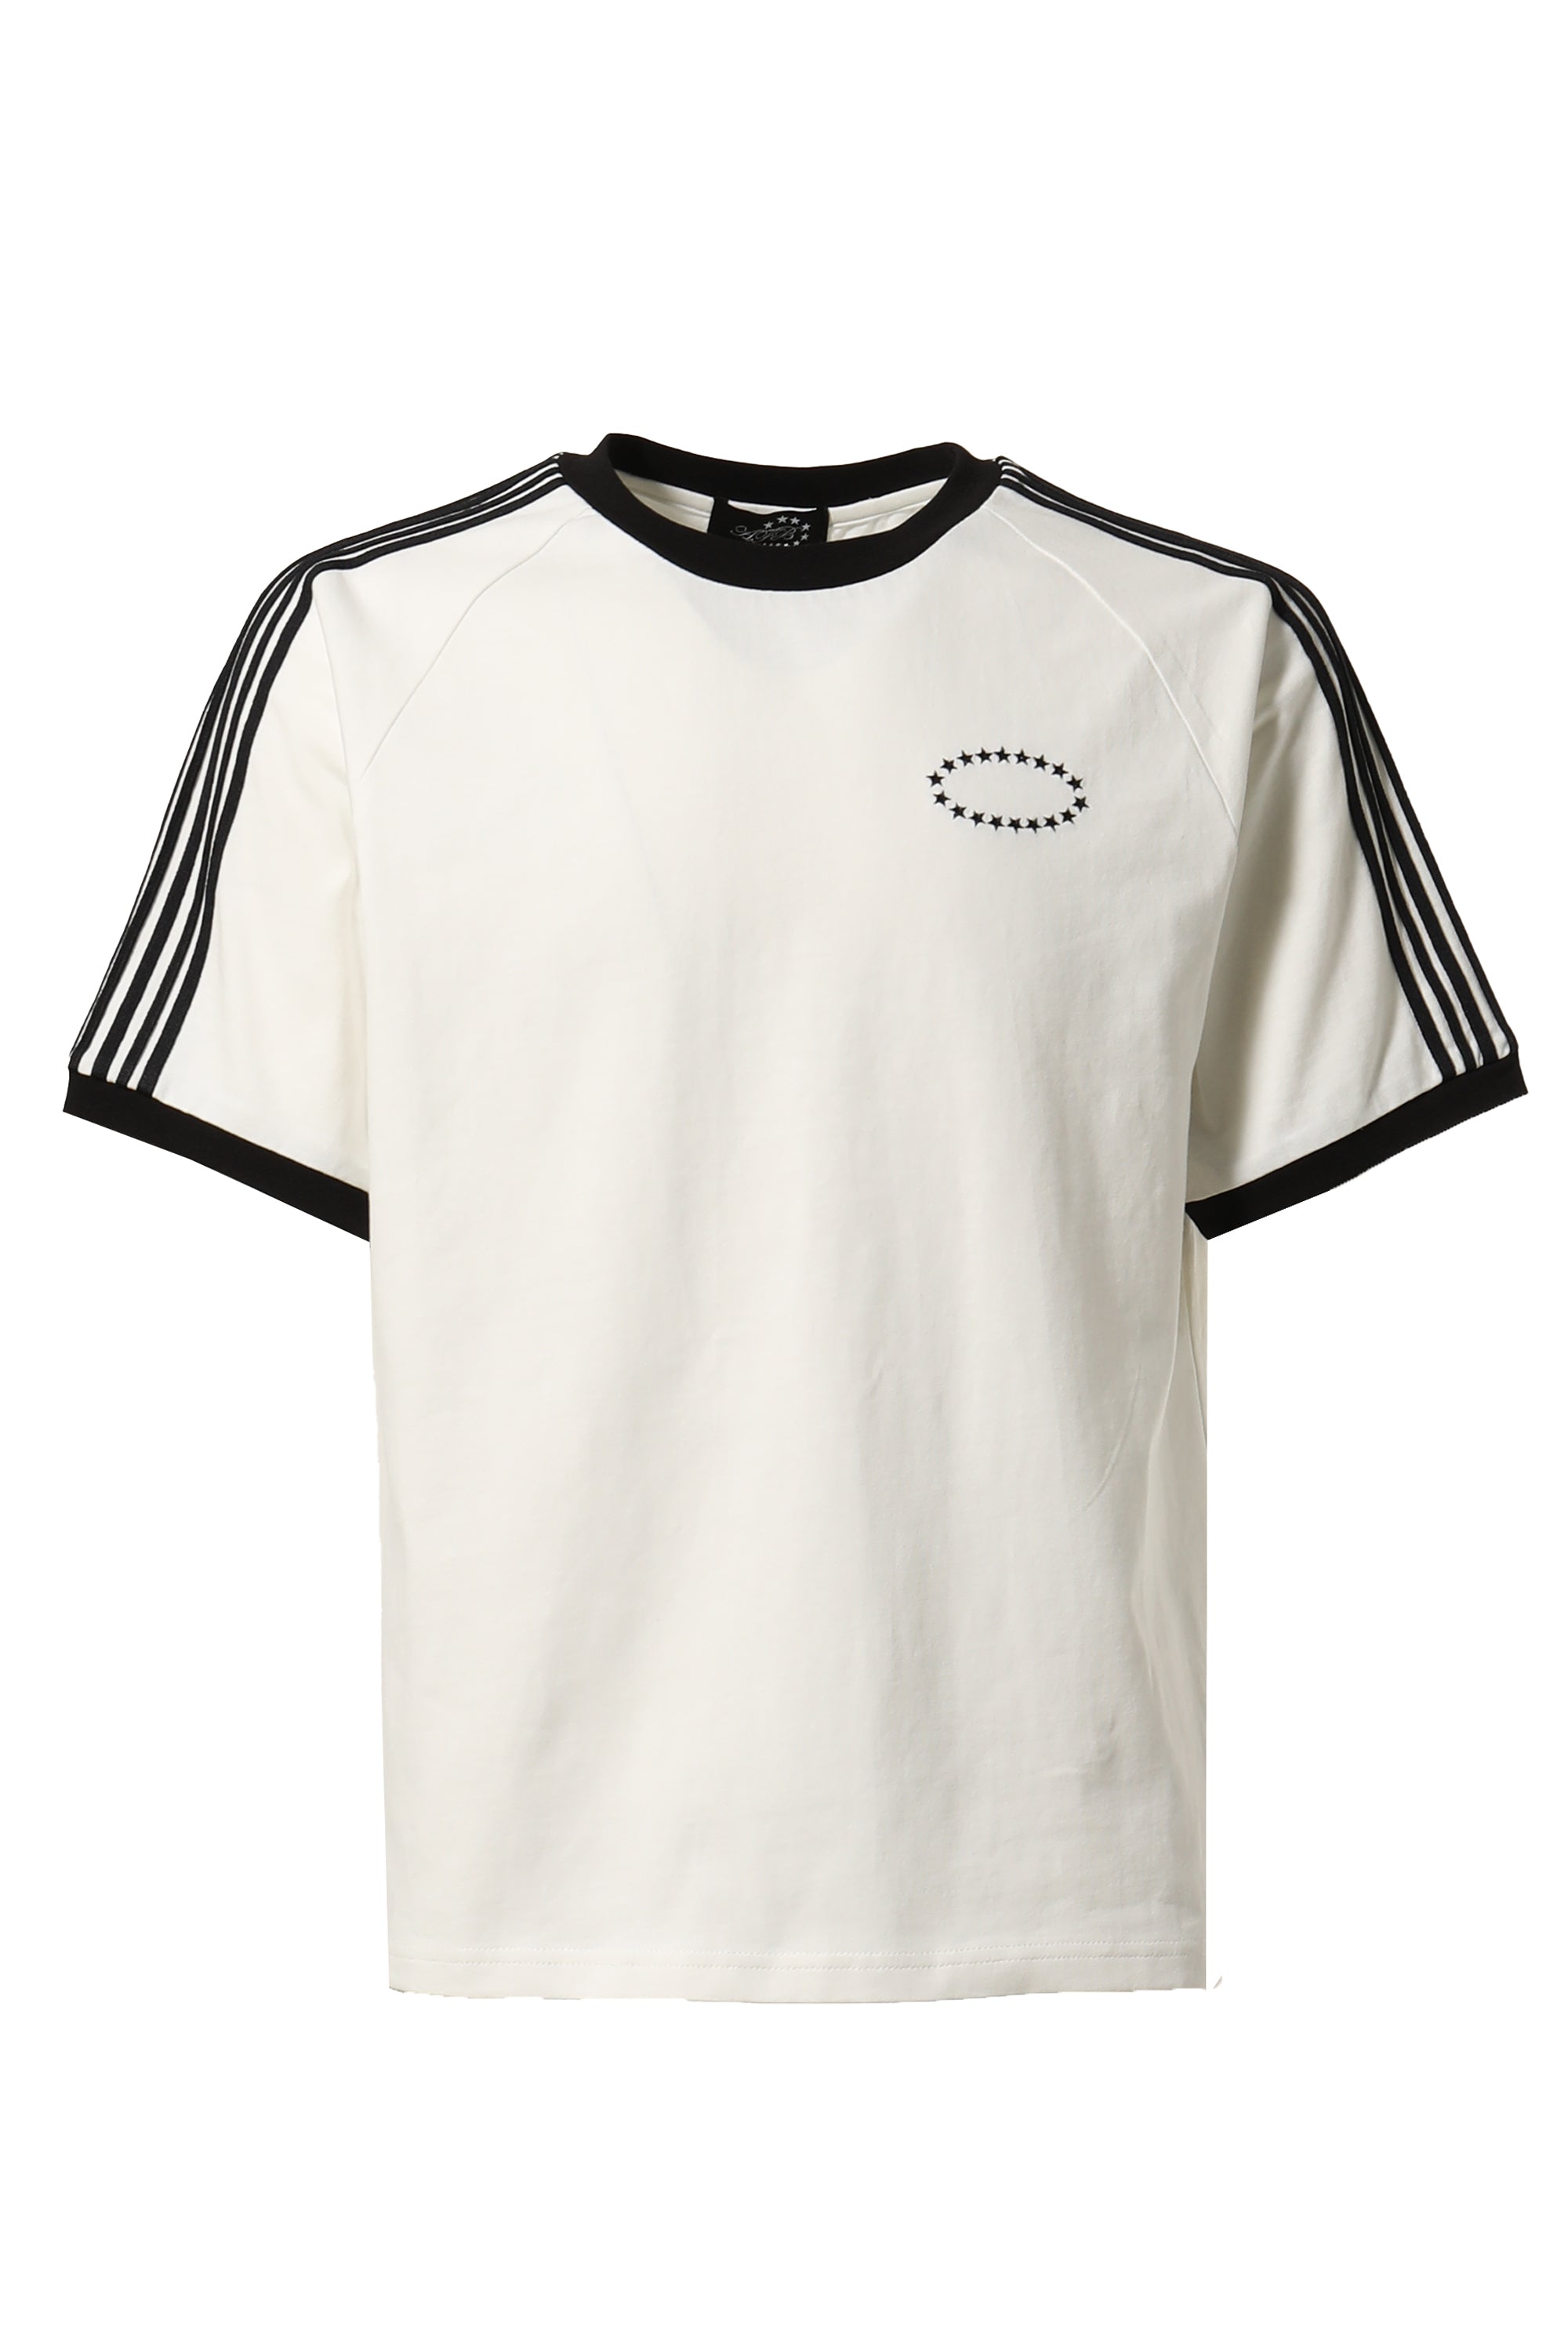 Off-White, Shirts, Off White X Mlb Collab T Shirt